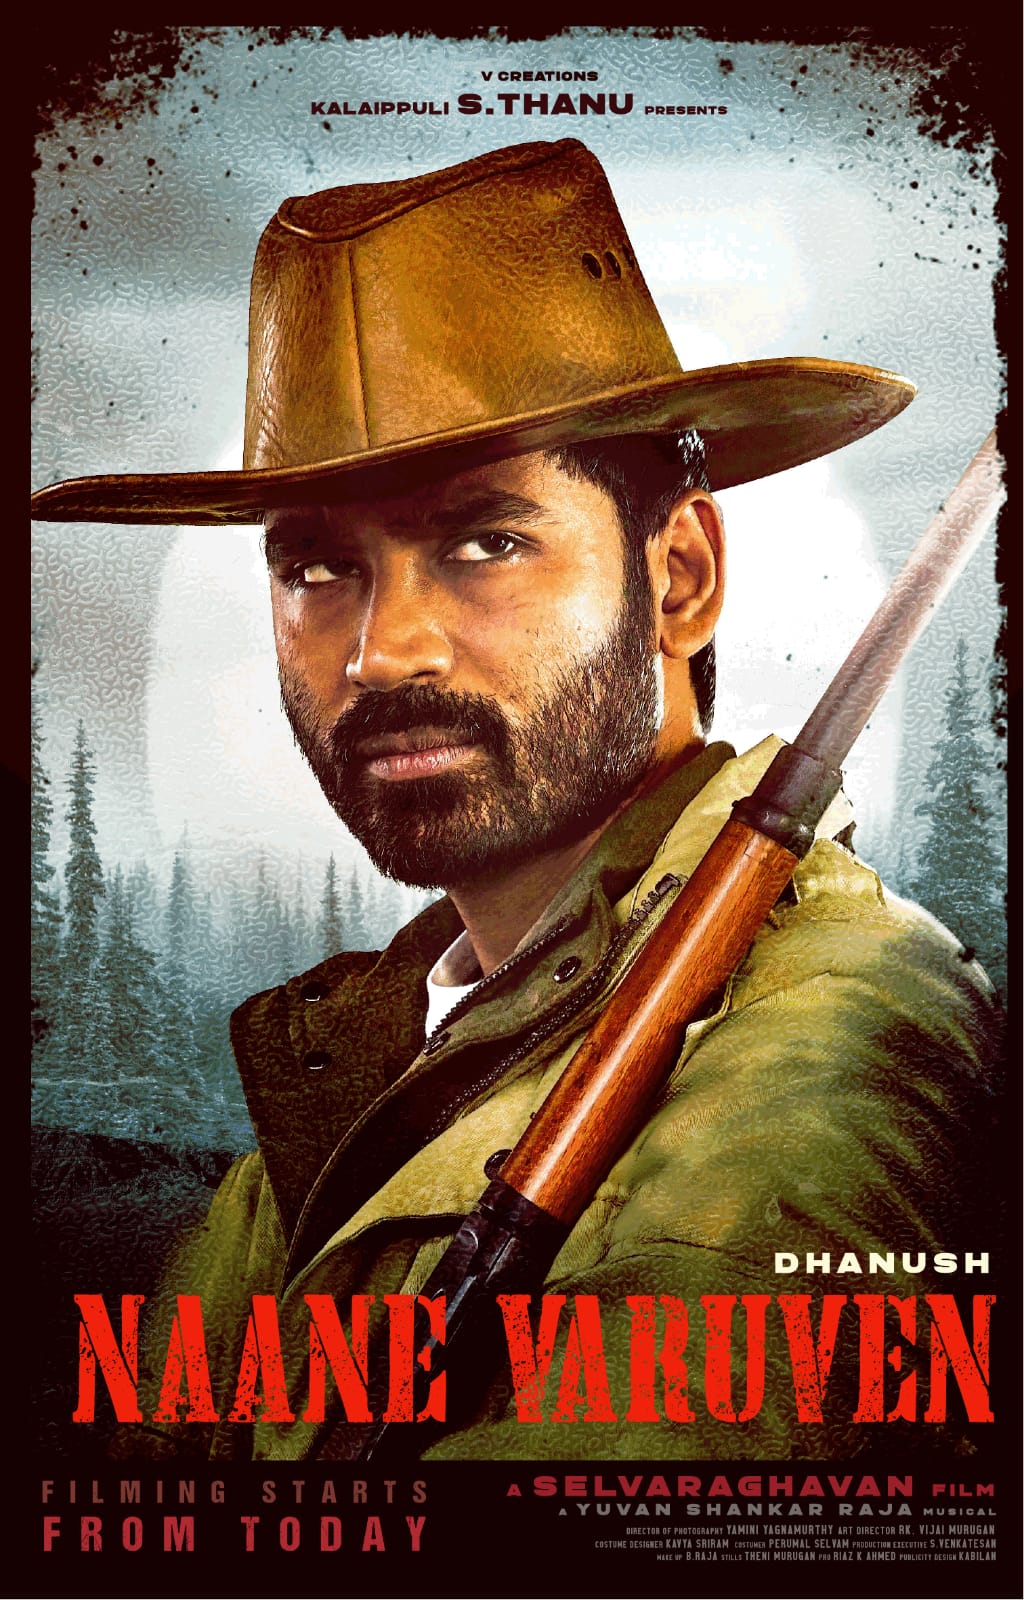 Latest Poster of the movie Nane Varuven starring dhanush